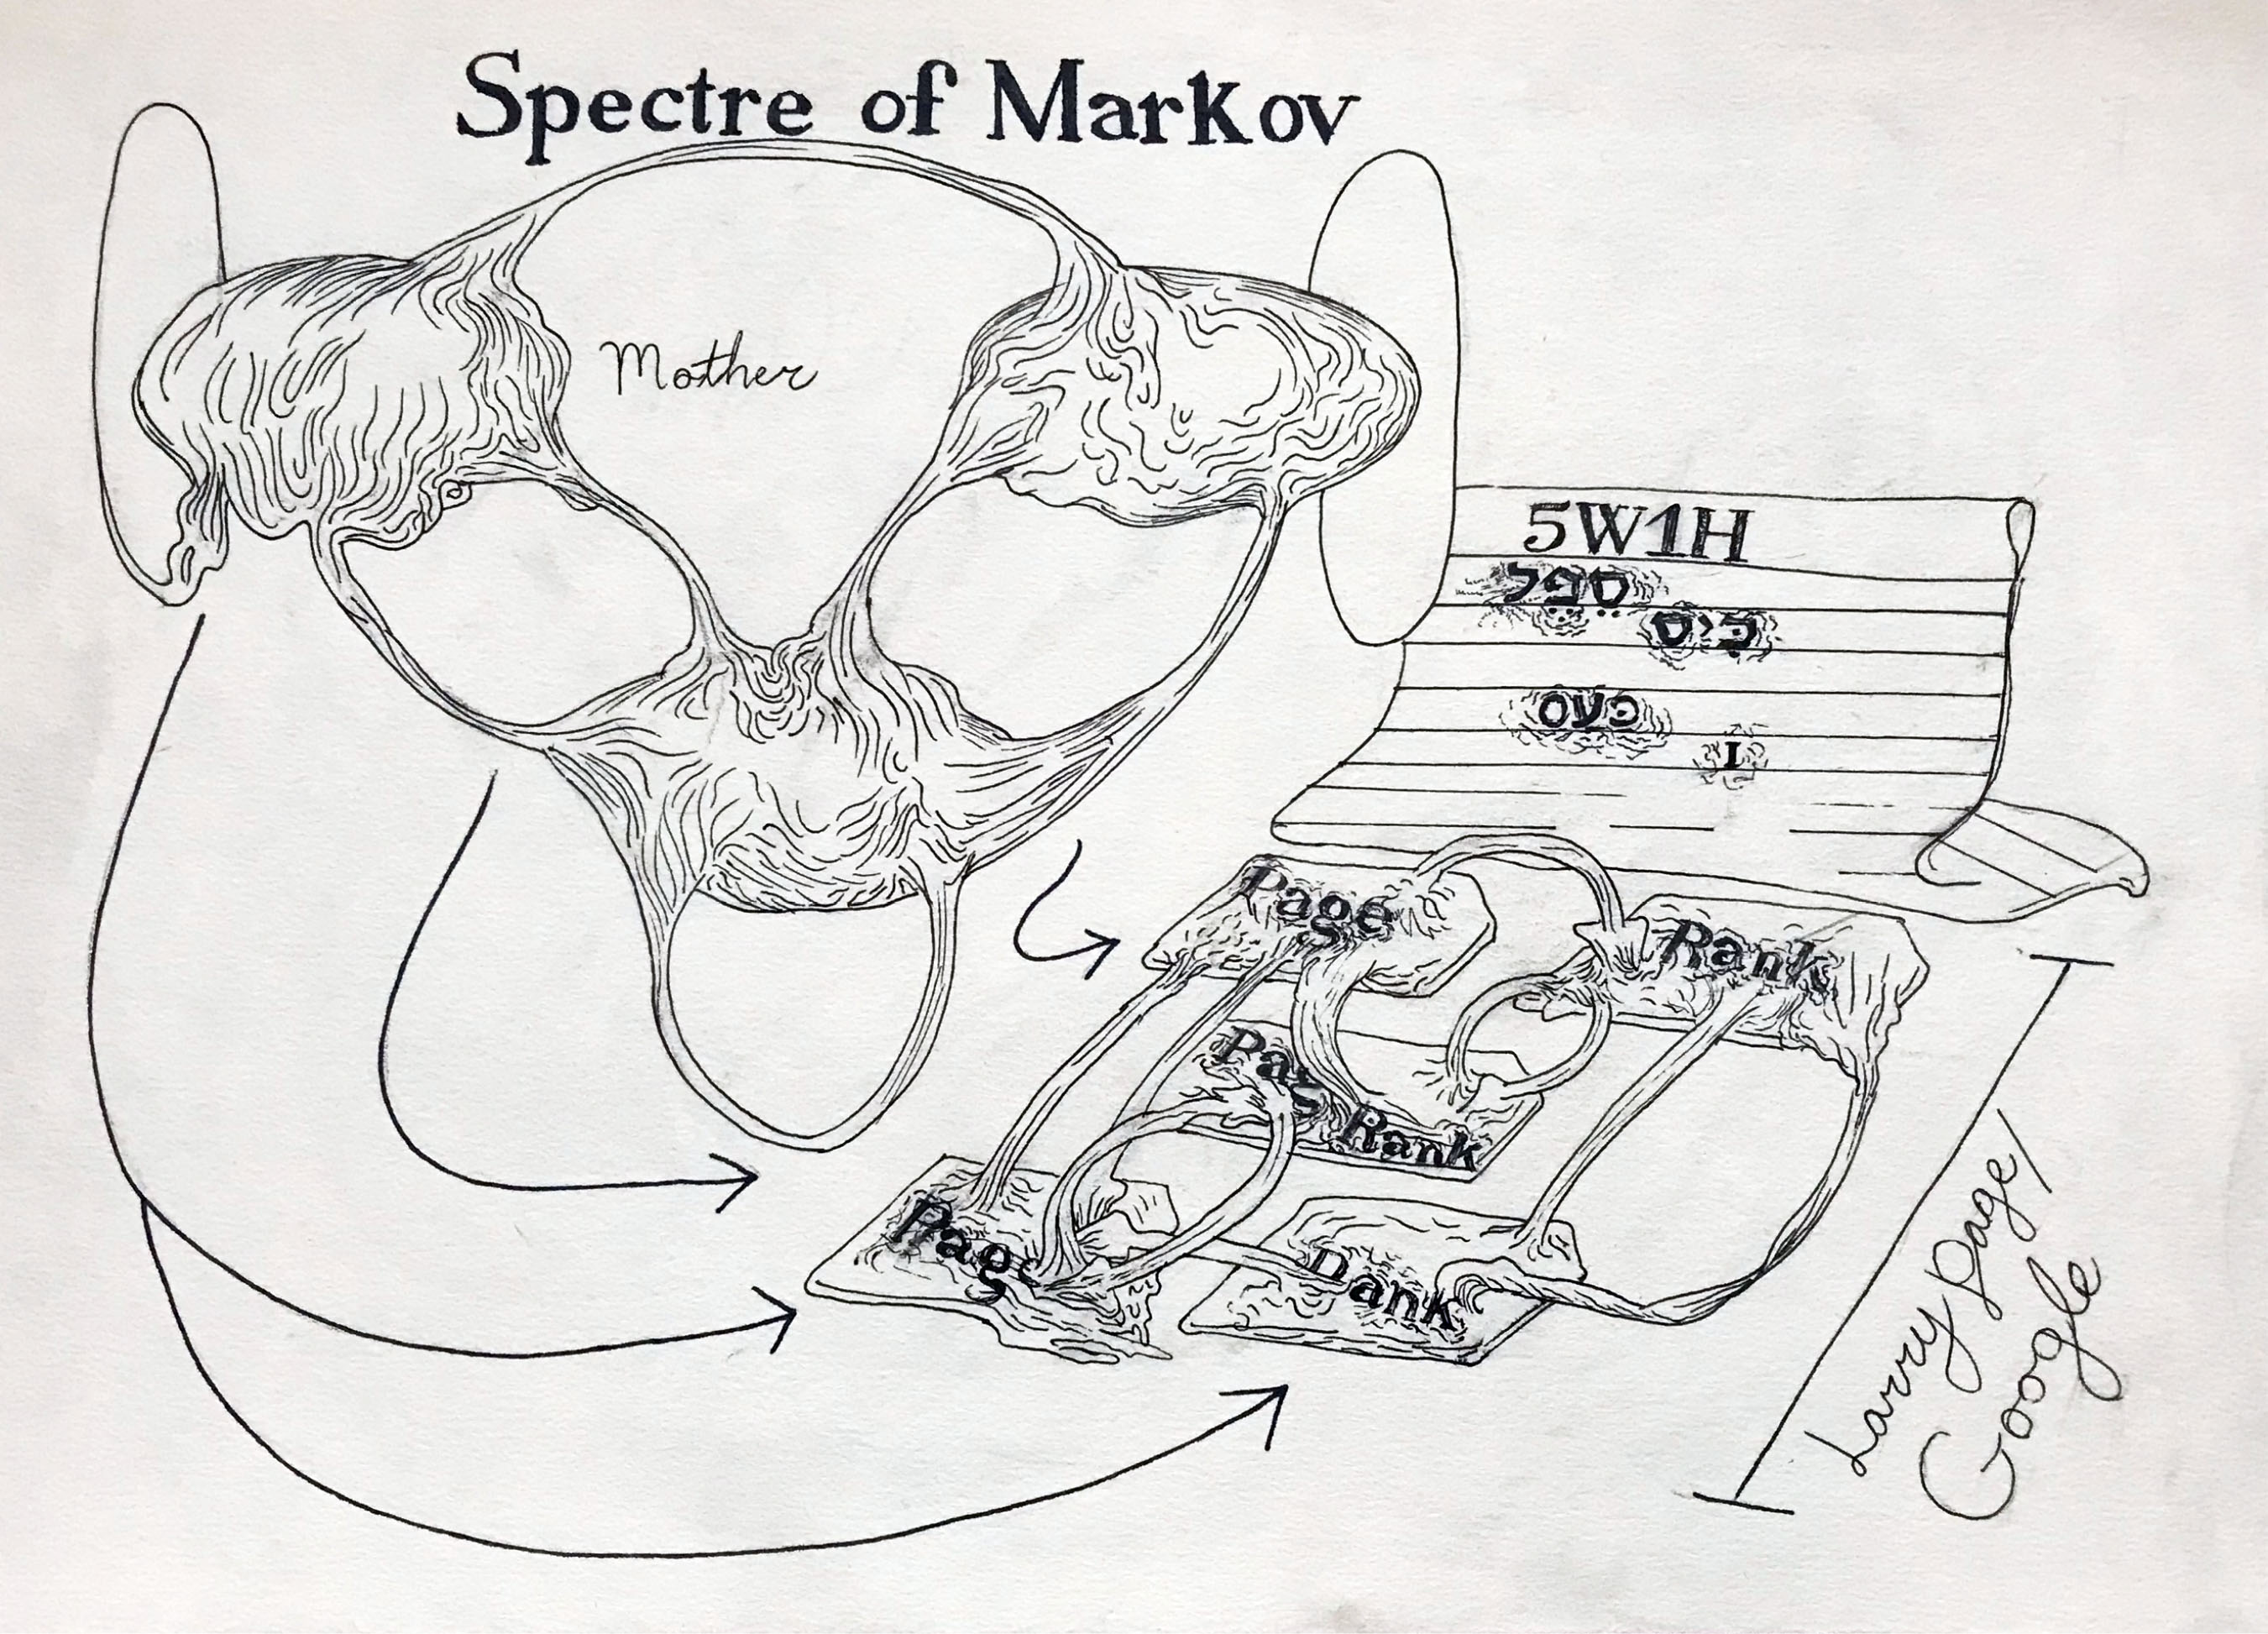 Spectre of Markov